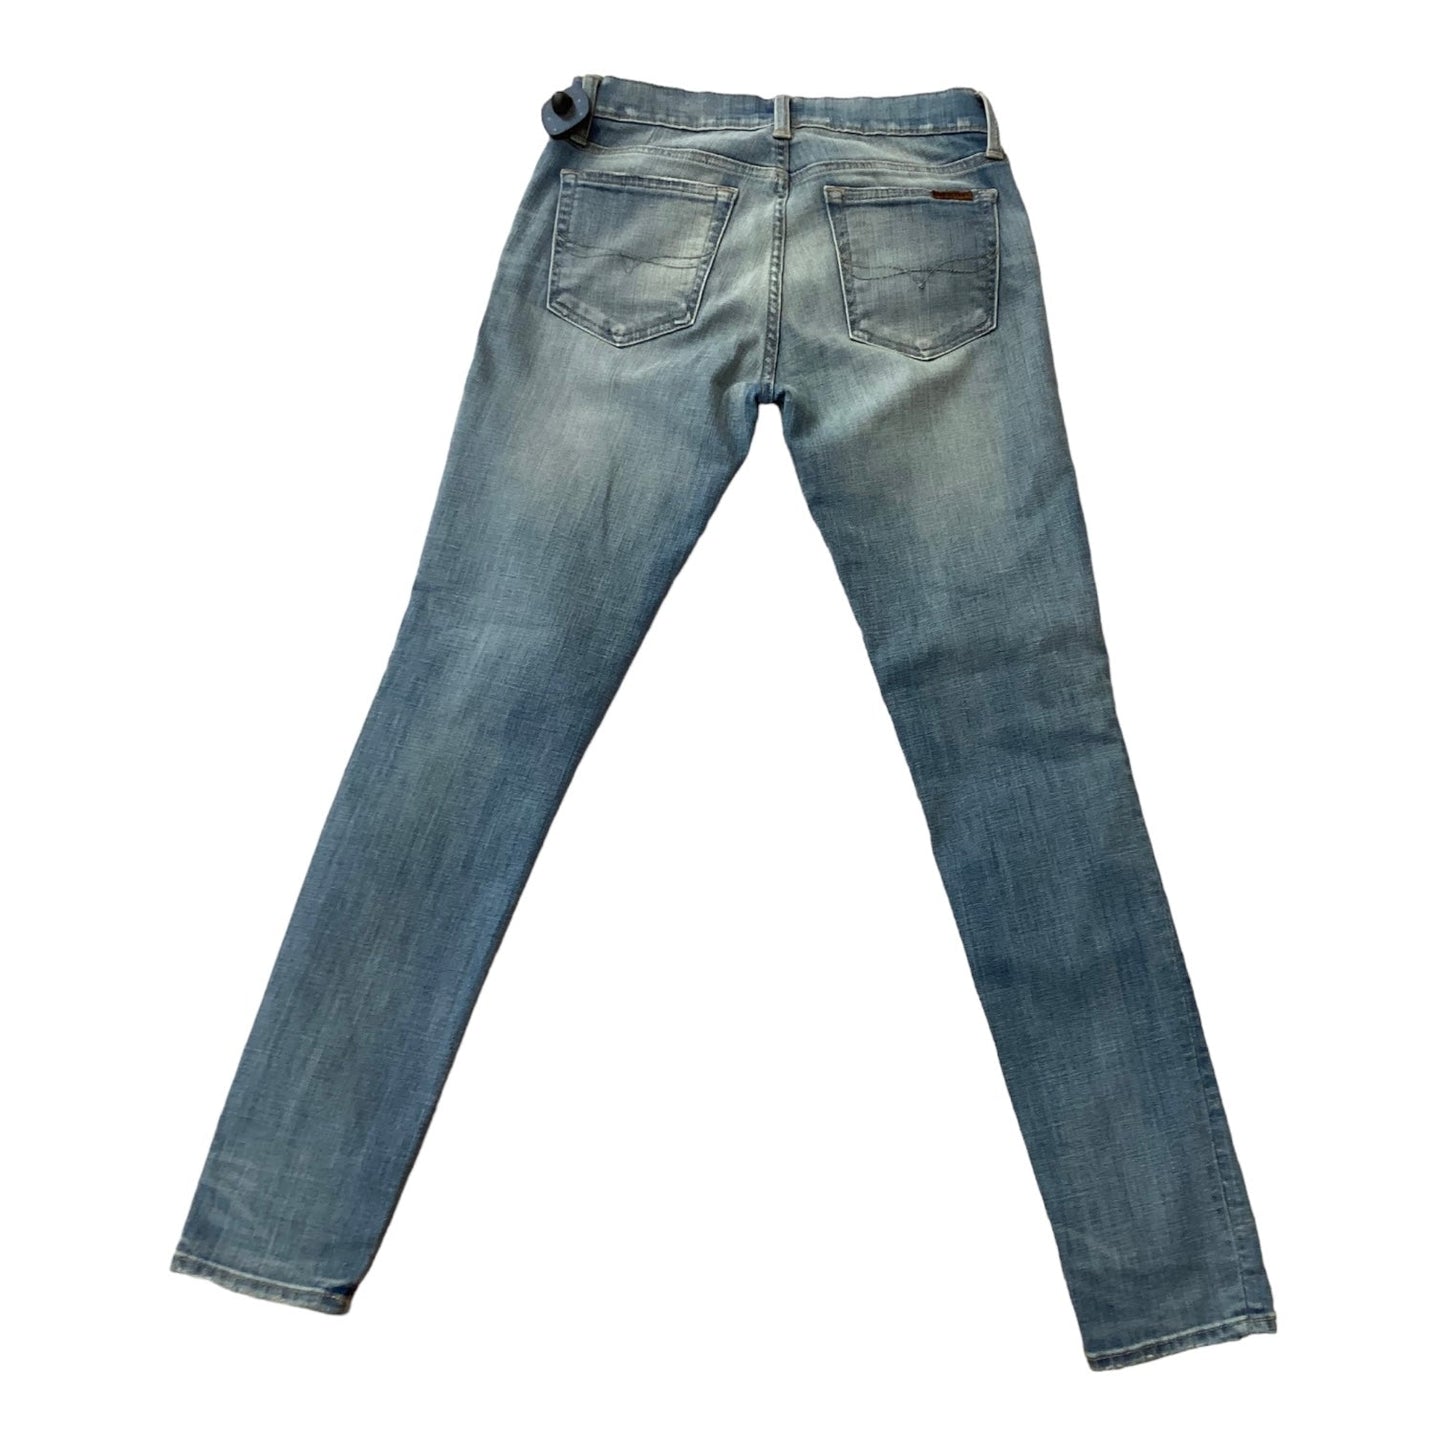 Jeans Designer By Polo Ralph Lauren  Size: 4